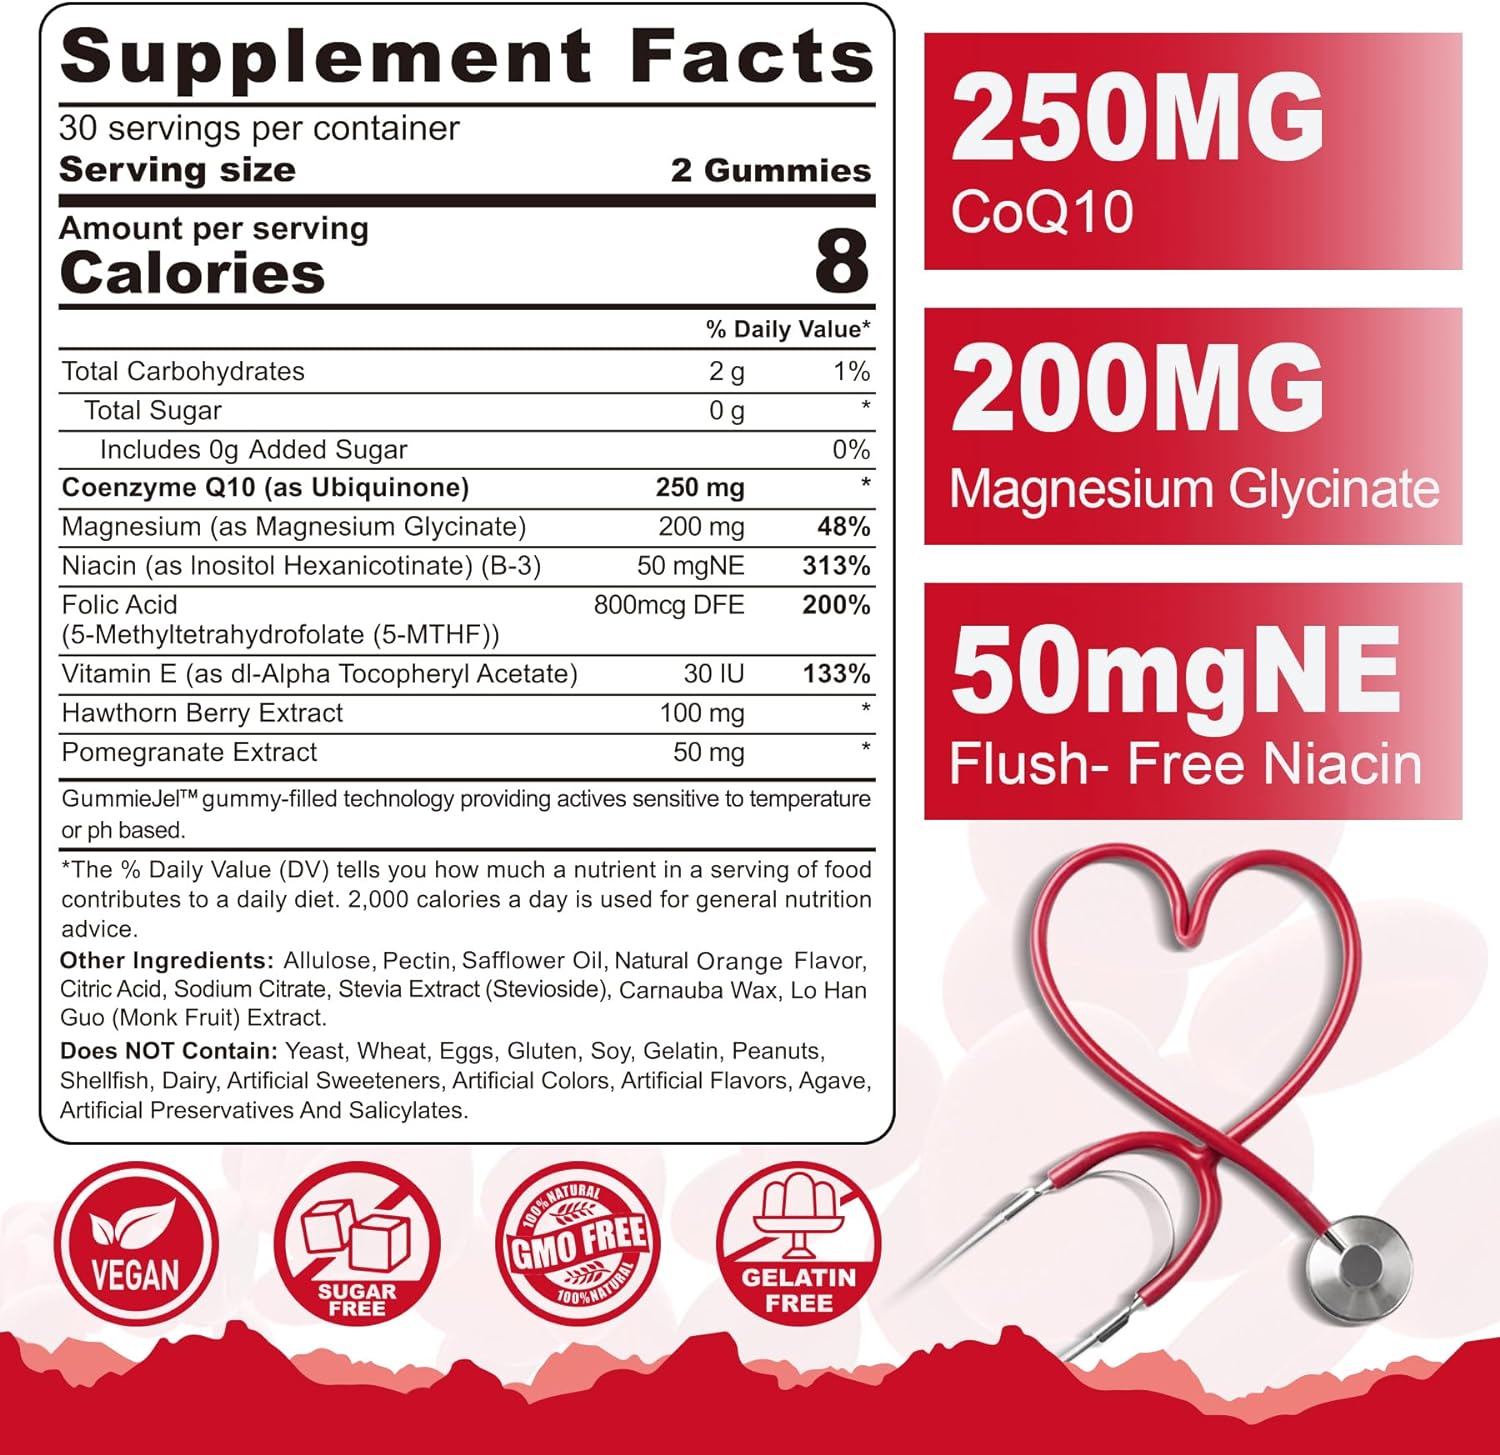 Sugar Free CoQ10 Filled Gummies 250MG, Coenzyme Q10 w/ Magnesium Glycinate, Niacin No-Flush Vitamin B3, E  Folic Acid, High Absorption CoQ10 (Ubiquinone) for Heart, Cellular Energy  Antioxidant